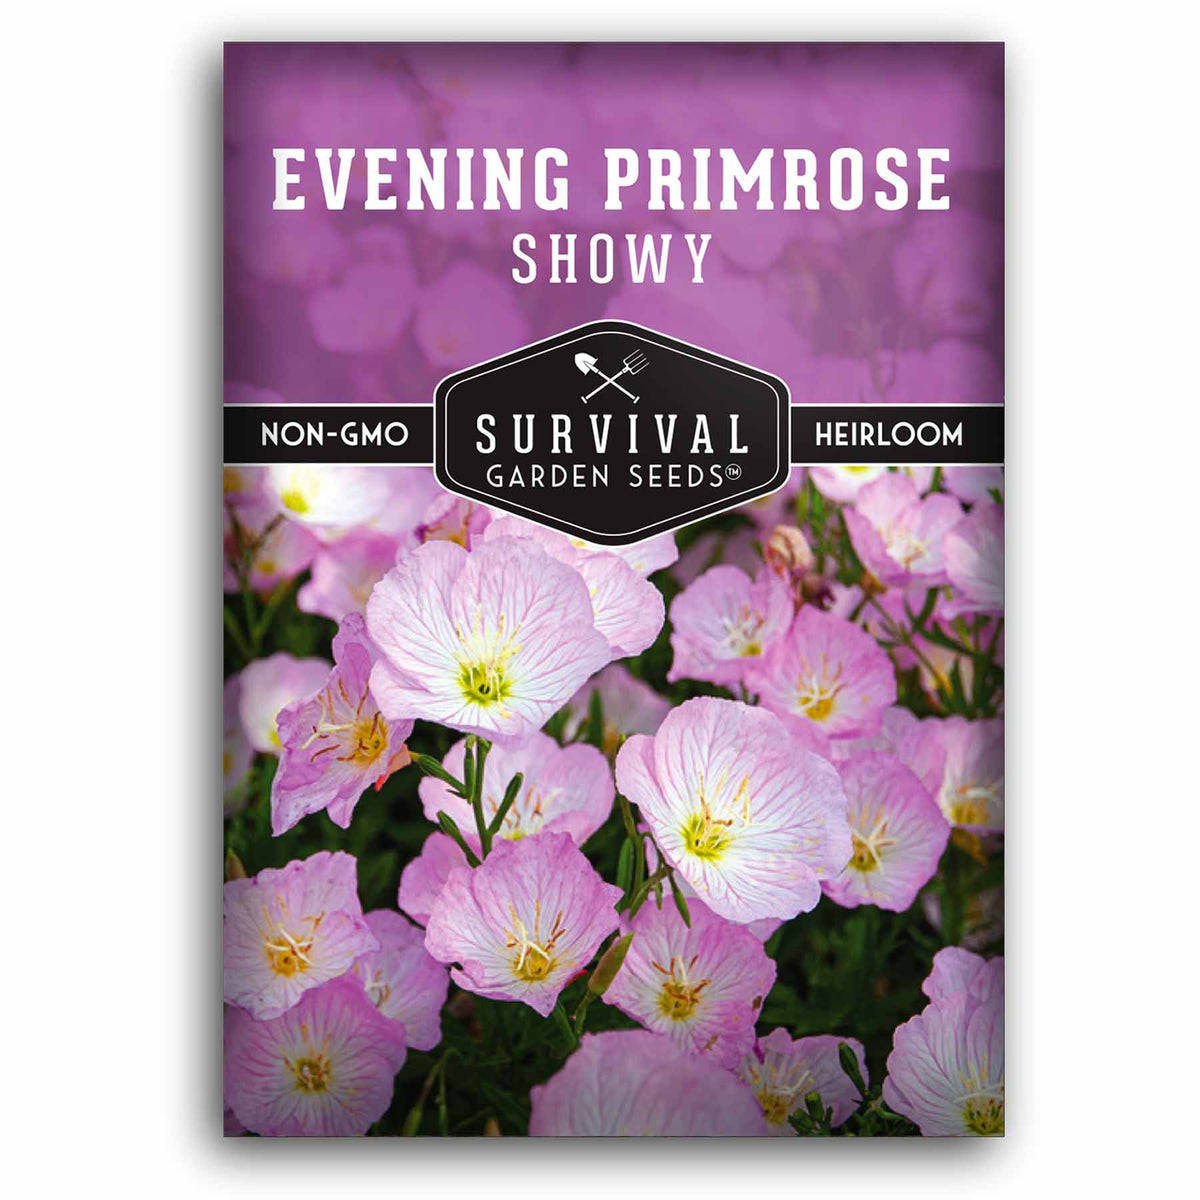 Evening primrose seeds